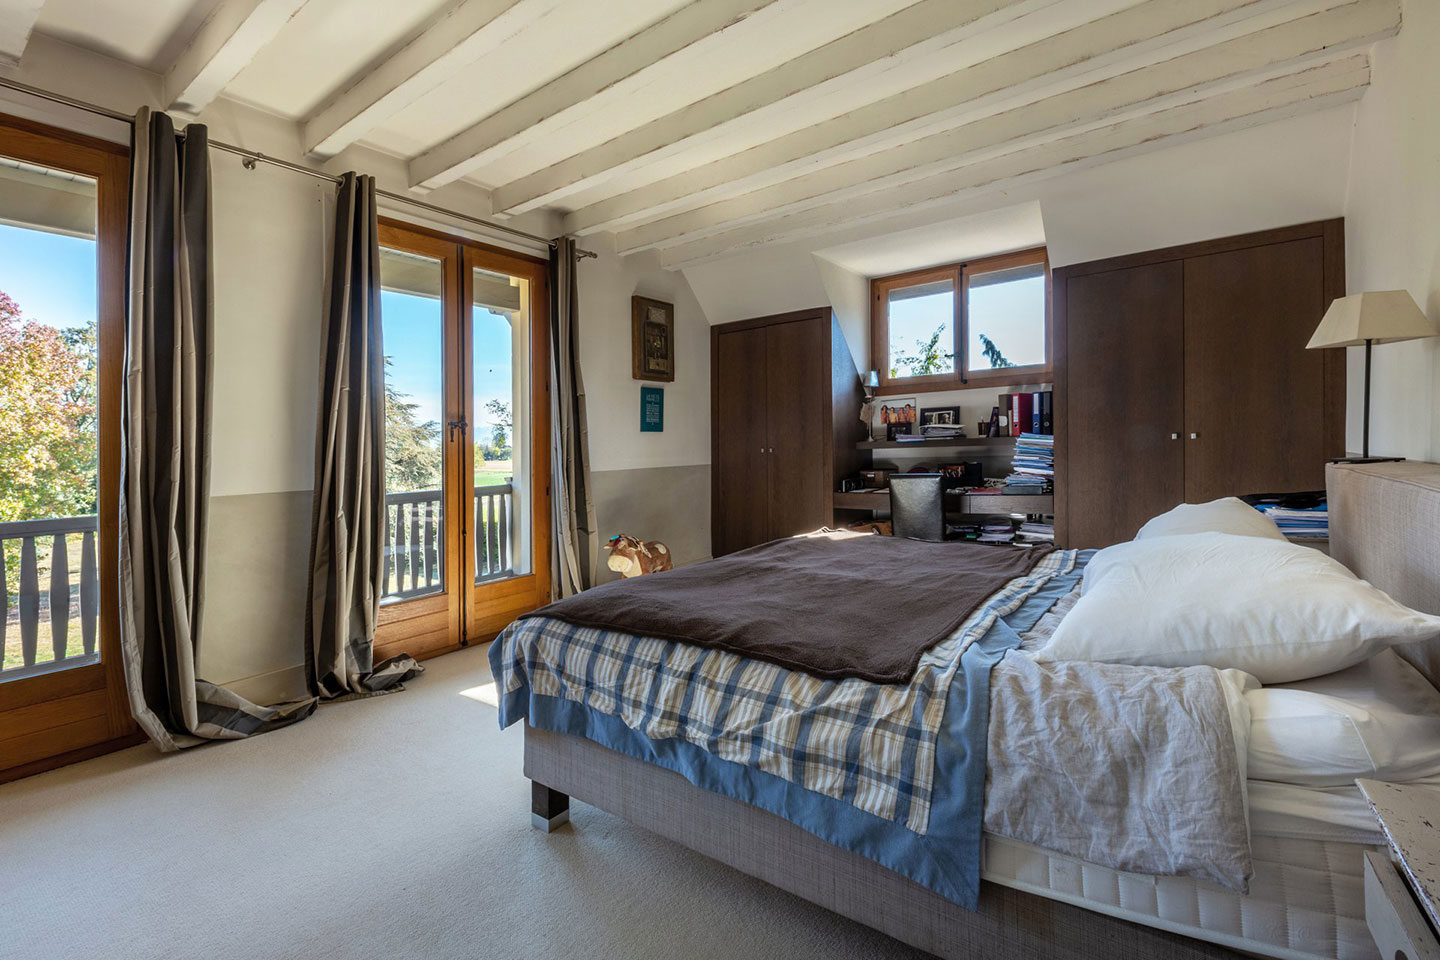 Splendid Property For Sale in Geneva Left Bank, Collonge-Bellerive | A Bedroom | Presented by Finest International | Finest Residences